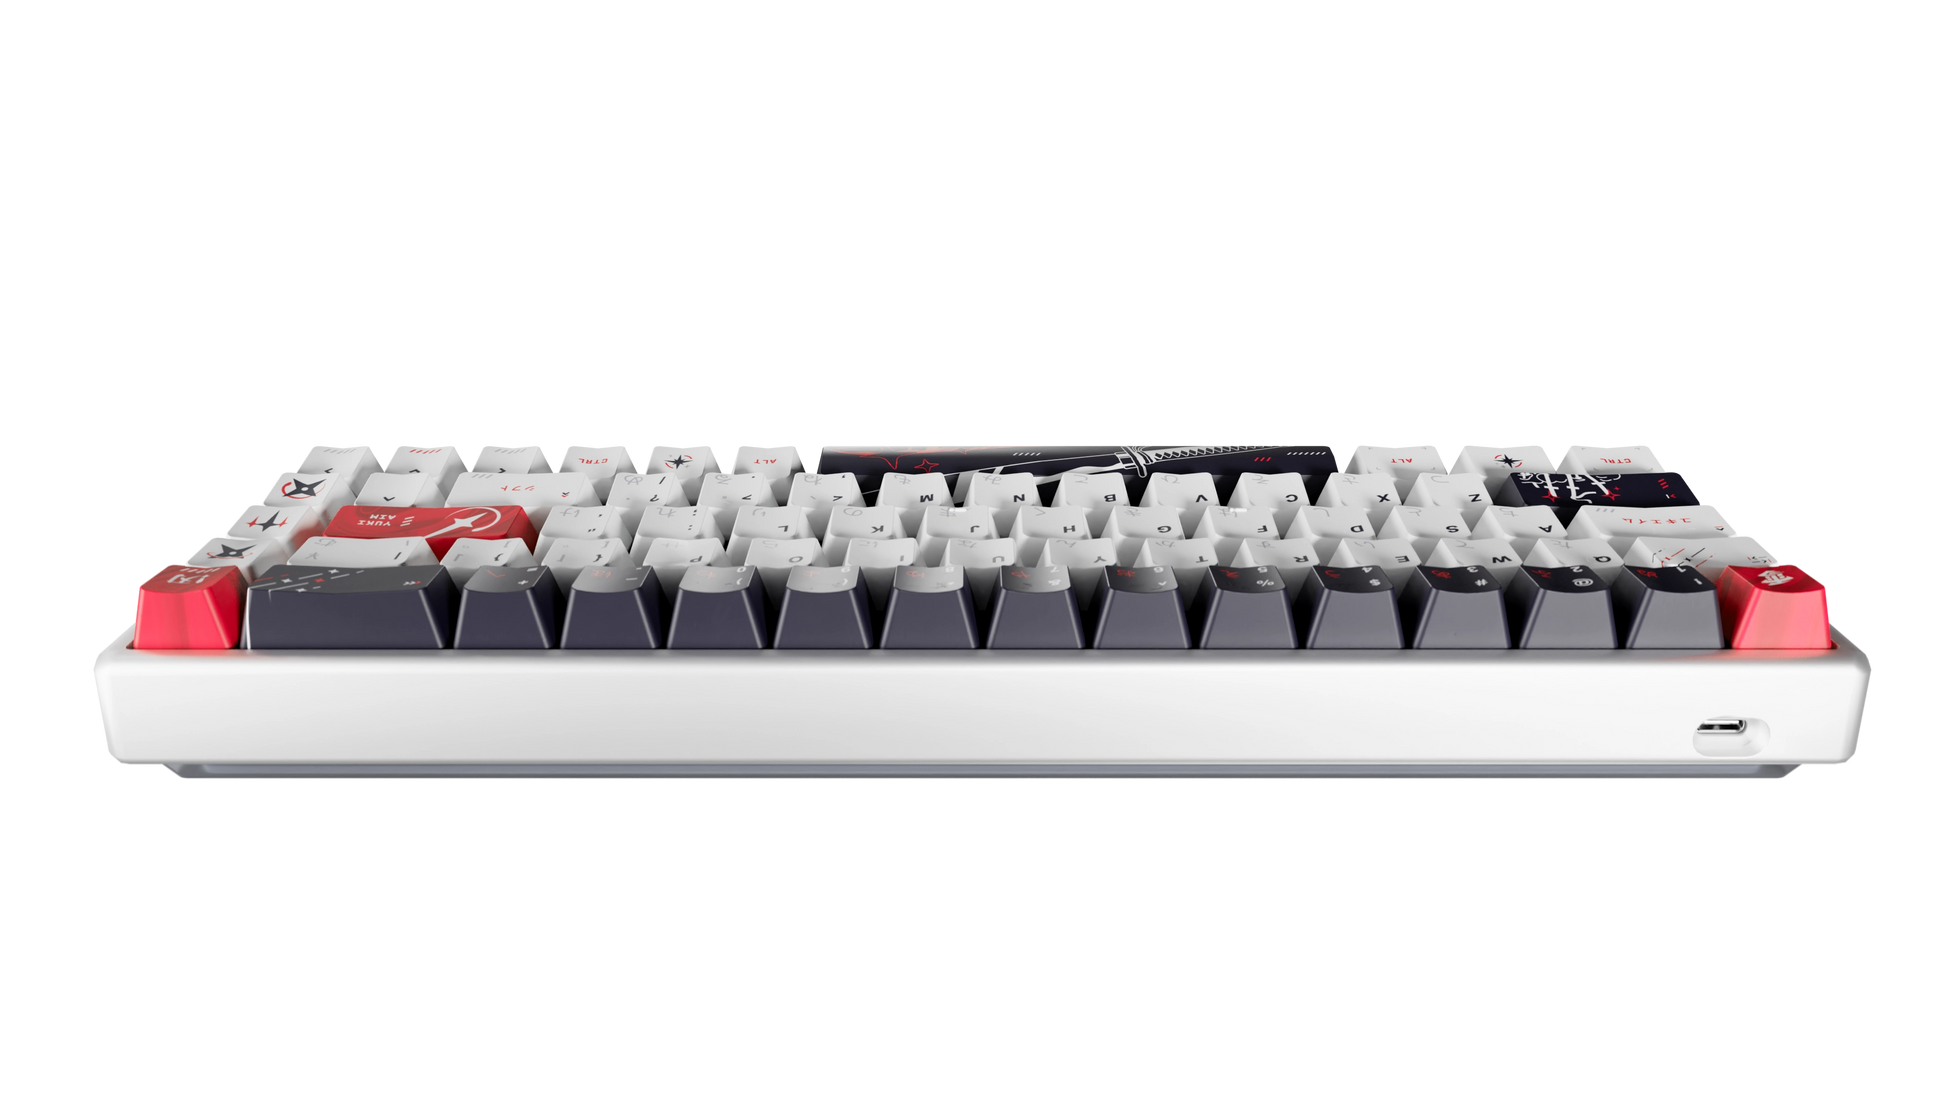 2023A/W新作送料無料 65 YukiAim Katana Polar 65 Keyboard Only ...